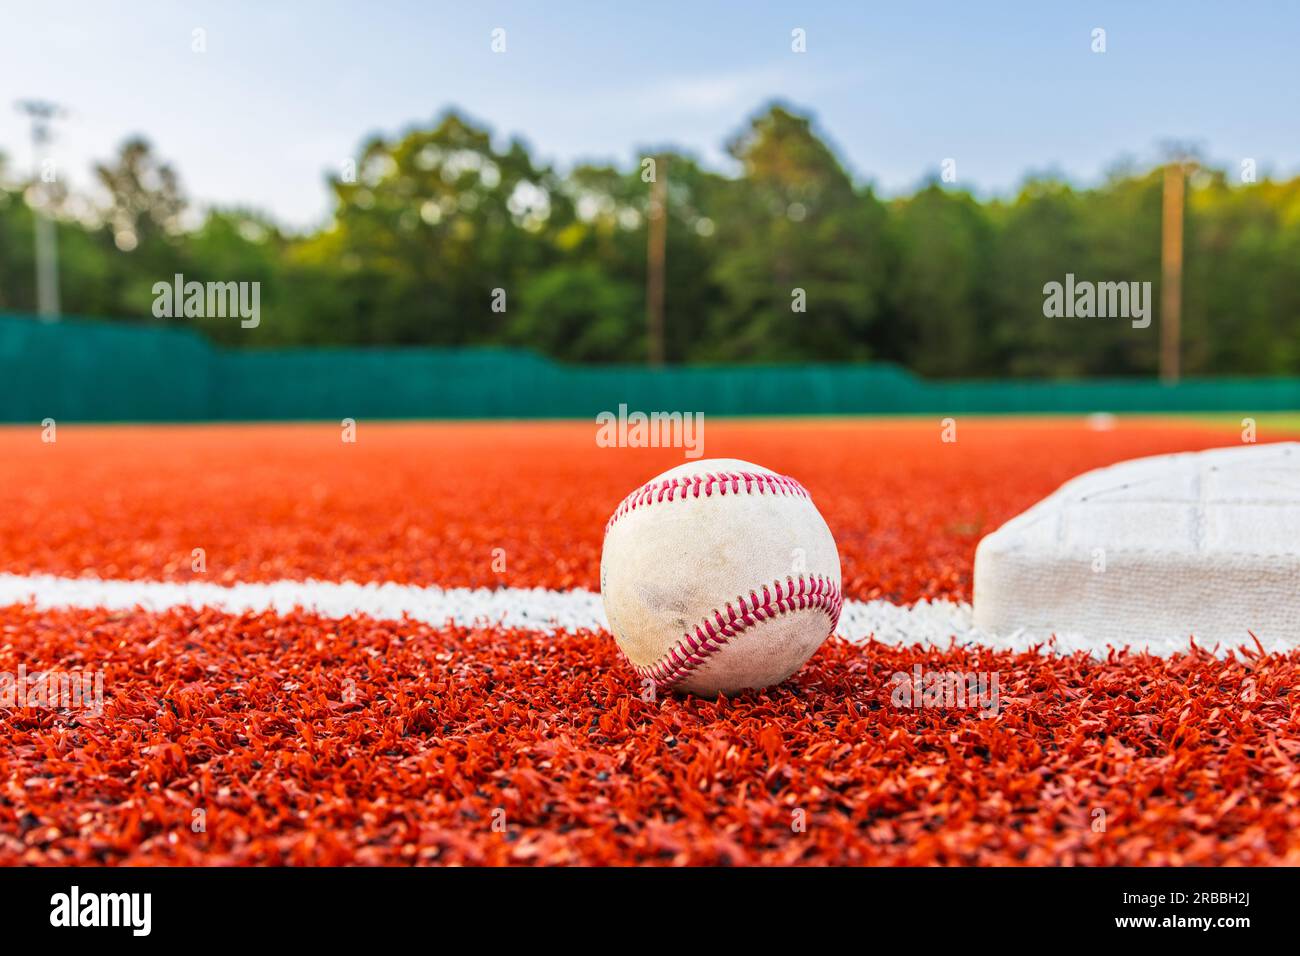 Baseline baseball hi-res stock photography and images - Alamy